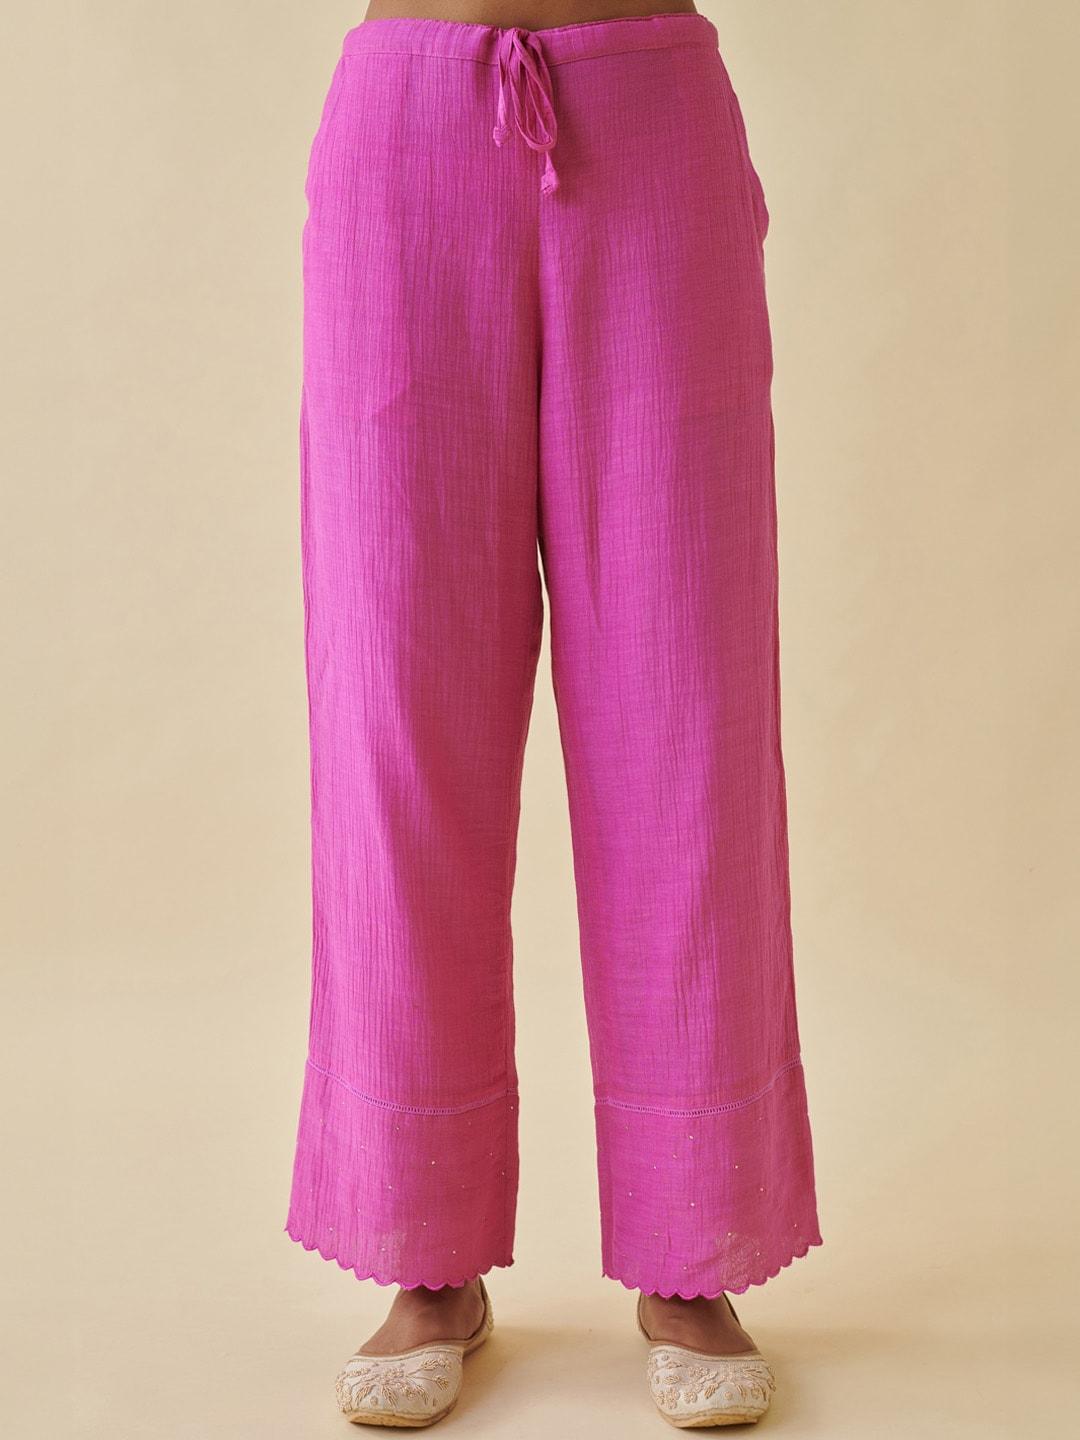 prakriti-jaipur-women-mid-rise-cotton-scallop-ethnic-trouser